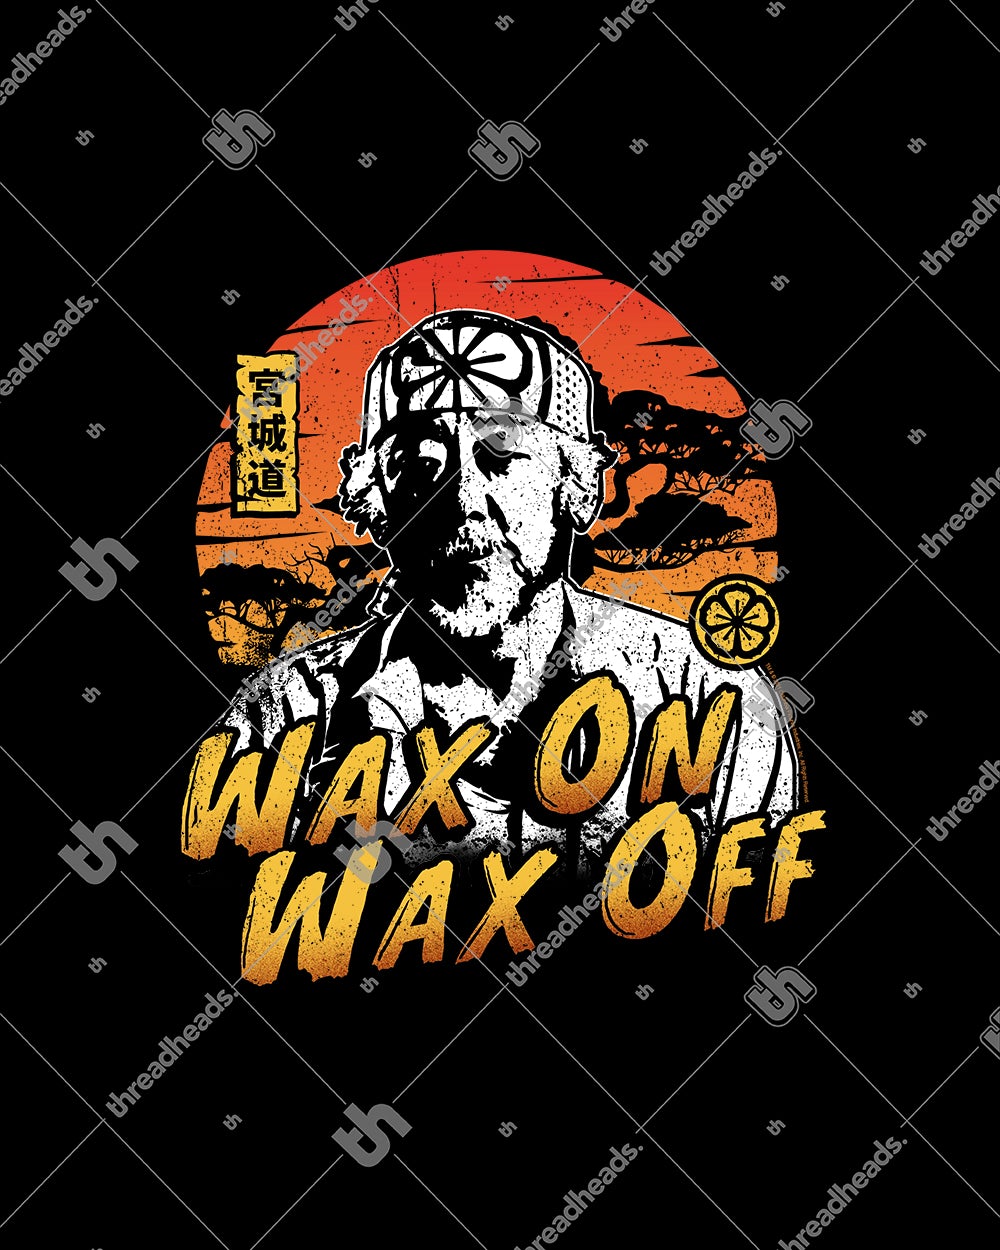 Wax On Wax Off T-Shirt Australia Online #colour_black